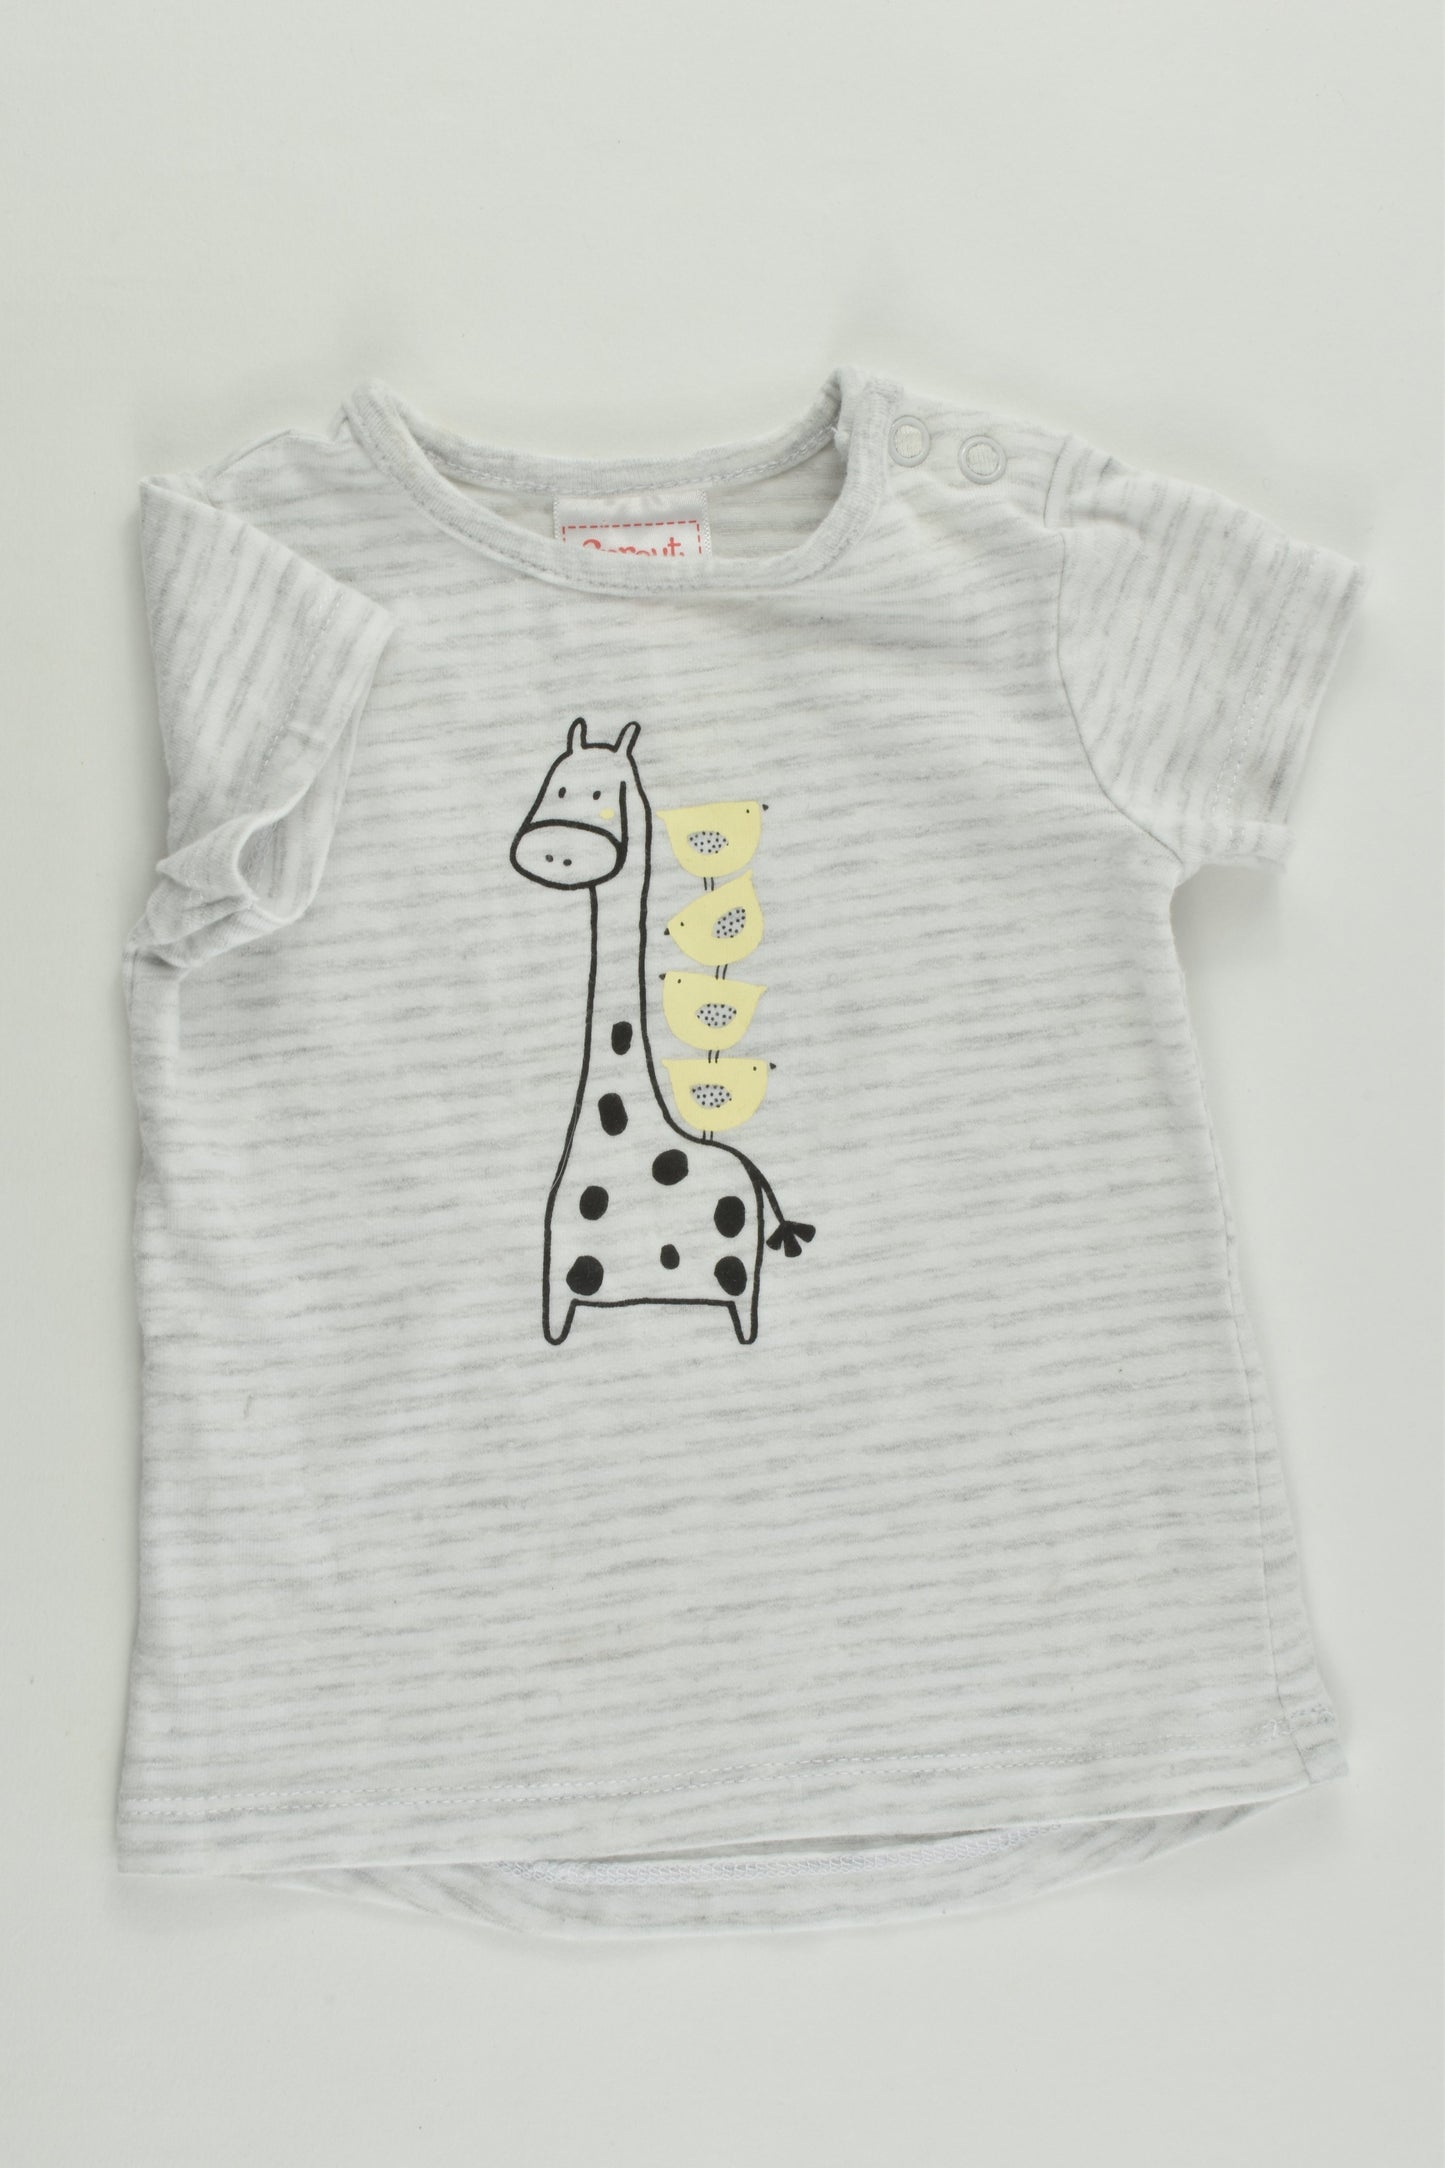 Sprout size 000 (0-3 months) Giraffe and Birds T-shirt